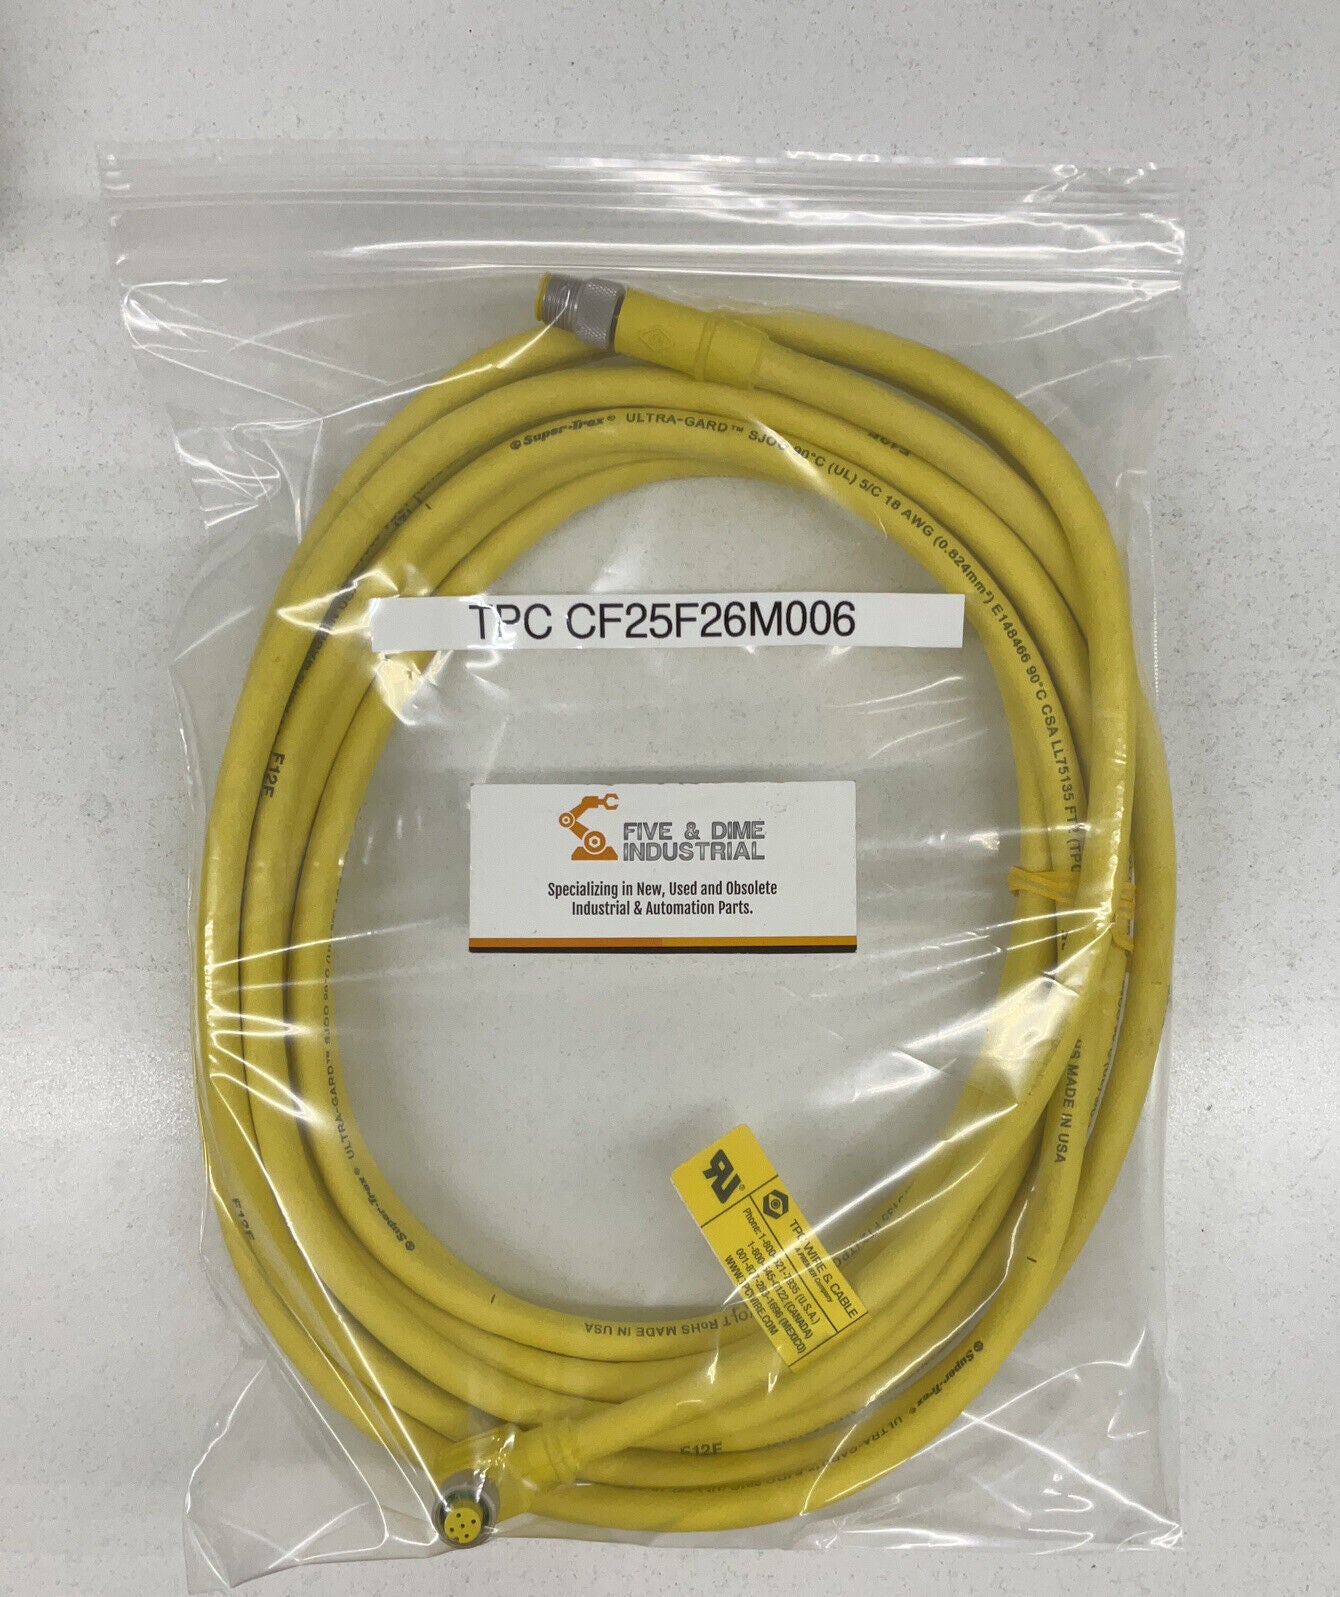 TPC CF25F26M006 SJ100 MICRO QUICK CONNECT CABLE 6M (CBL123)